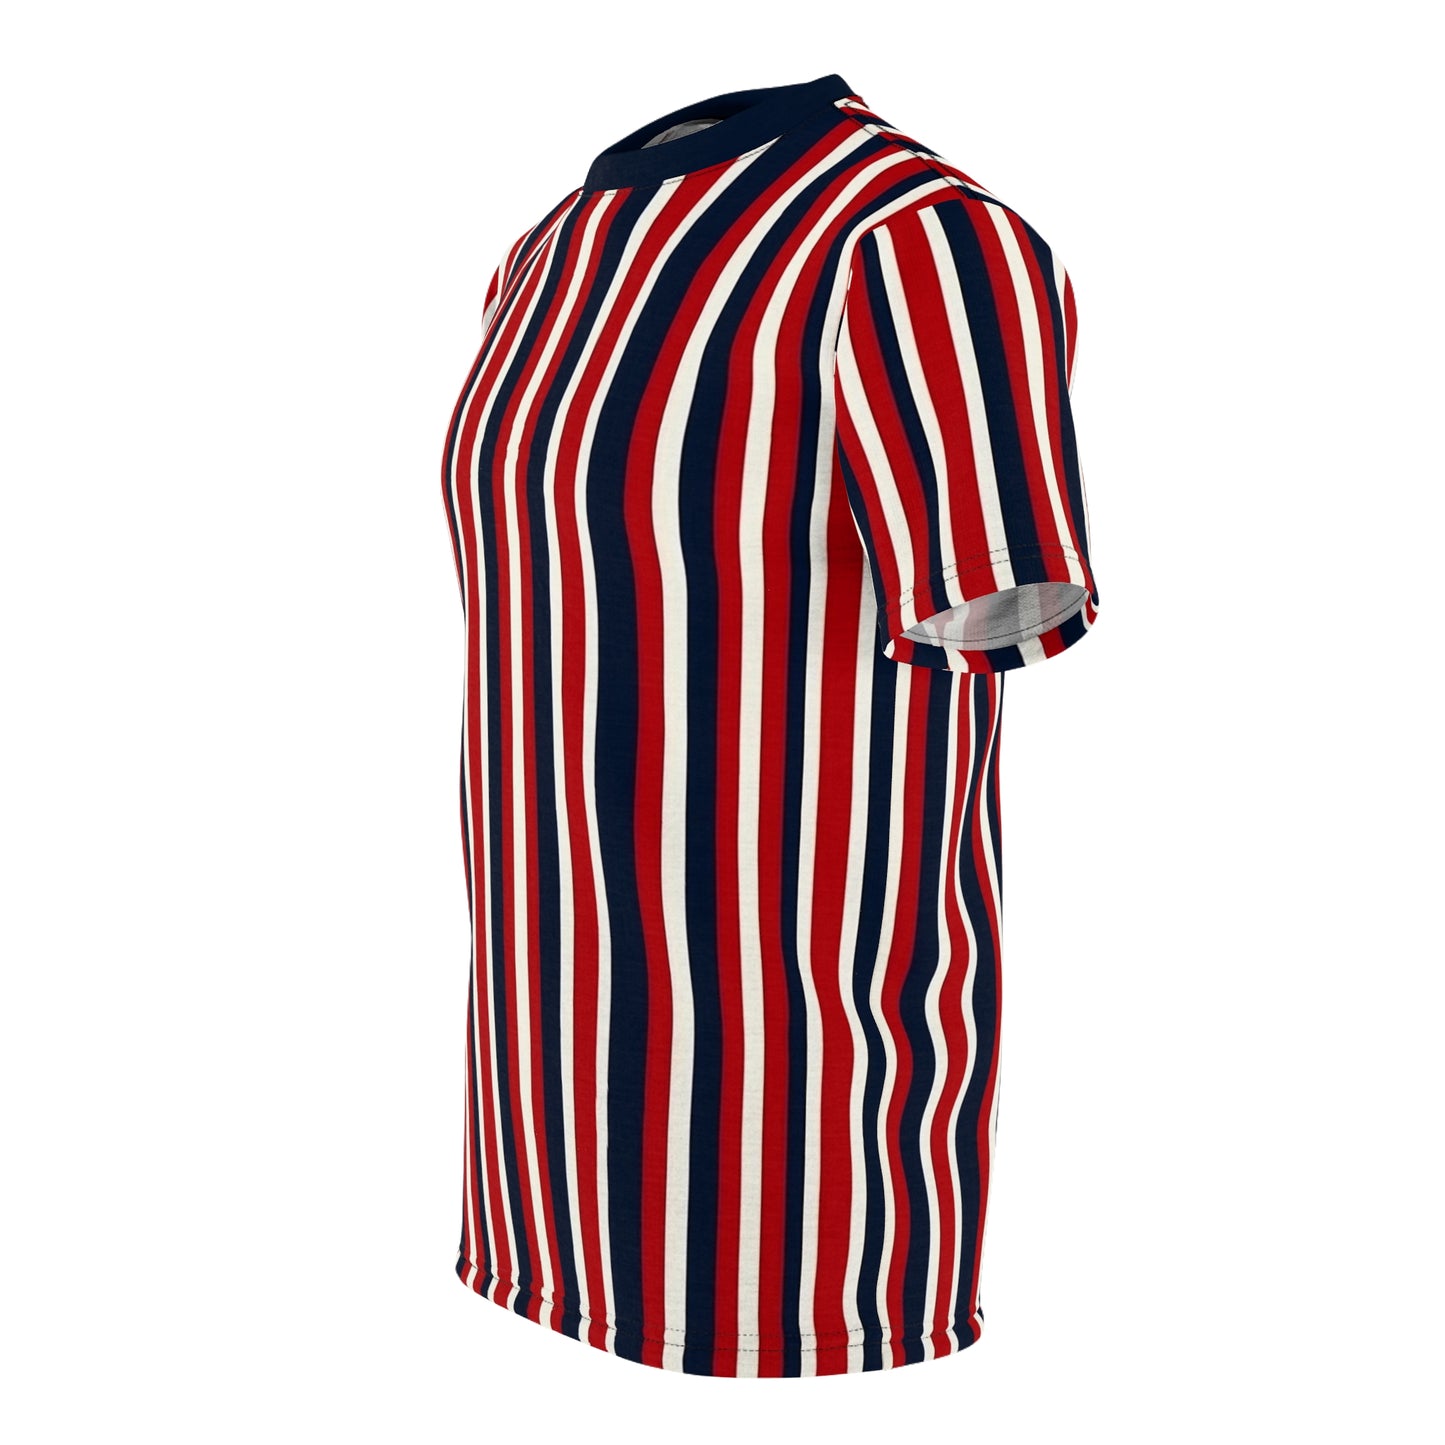 Red White Blue Striped Tshirt, Vertical Stripe American Designer Aesthetic Fashion Crewneck Men Women Tee Top Short Sleeve Shirt Starcove Fashion